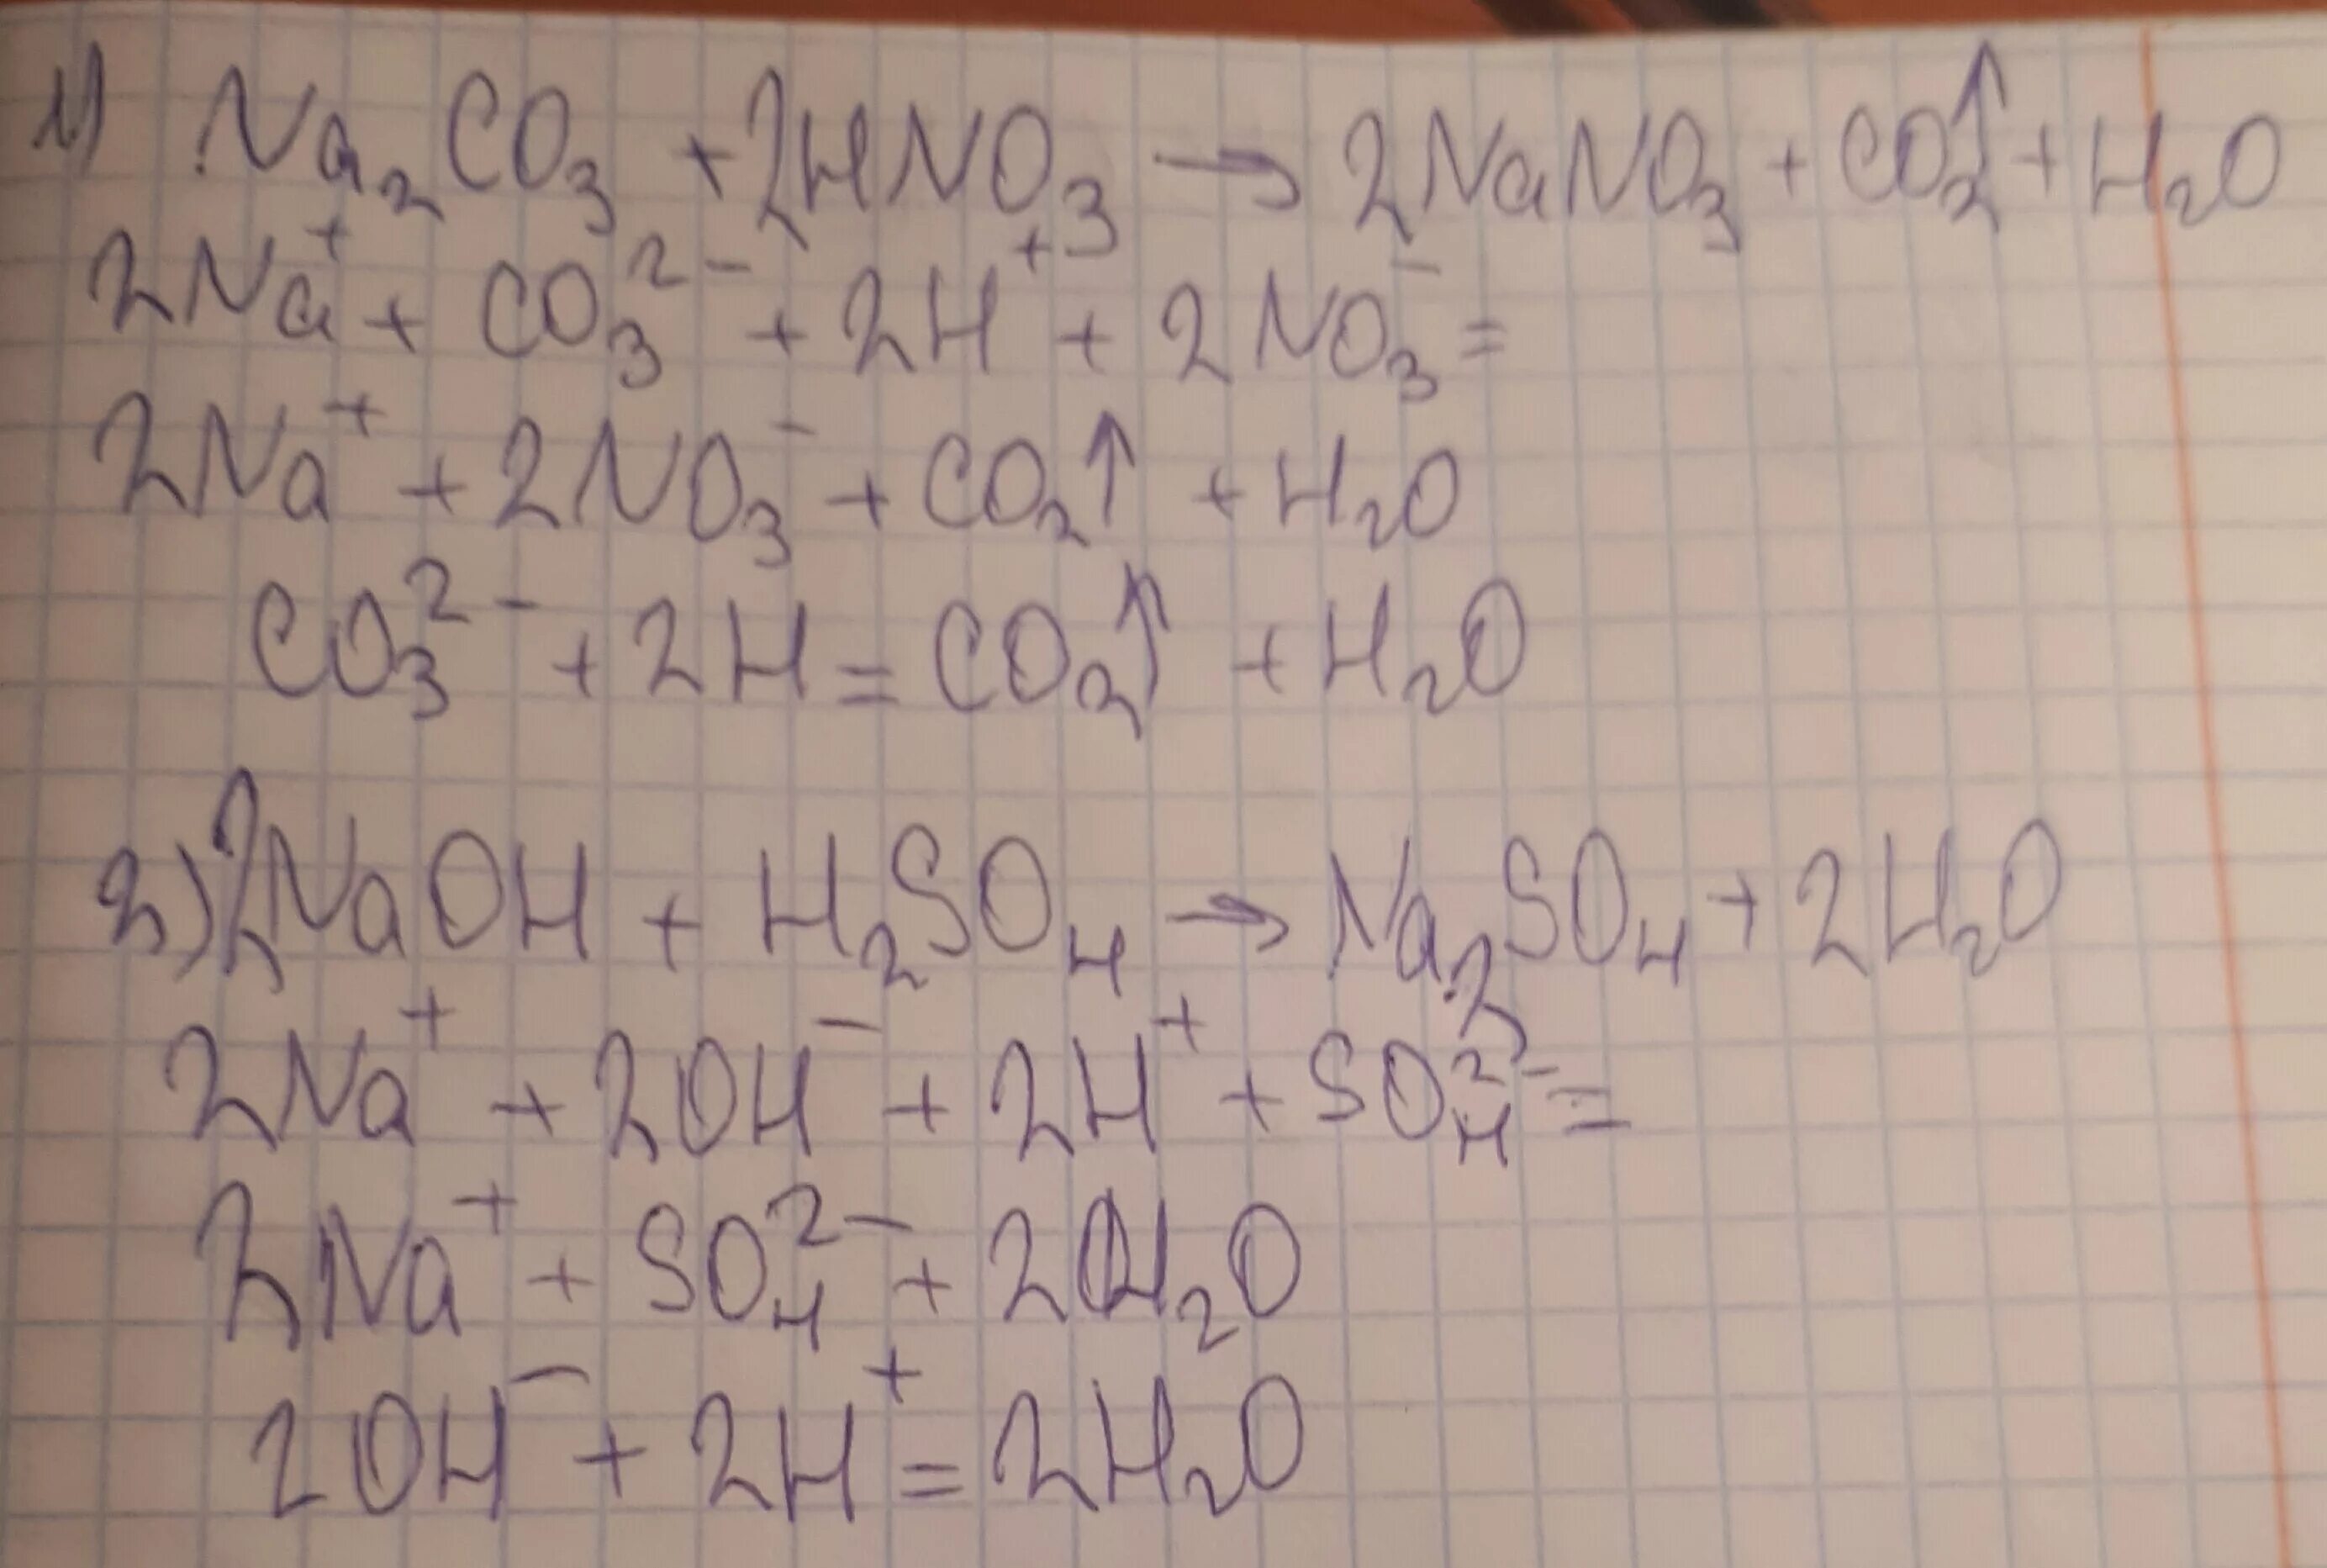 Na2so4 ионное уравнение. NAOH h2so4 сокращенное ионное уравнение. H2so4 NAOH ионное уравнение и молекулярное. NAOH h2so4 ионное уравнение полное. NAOH+h2so4 ионное уравнение полное и сокращенное.